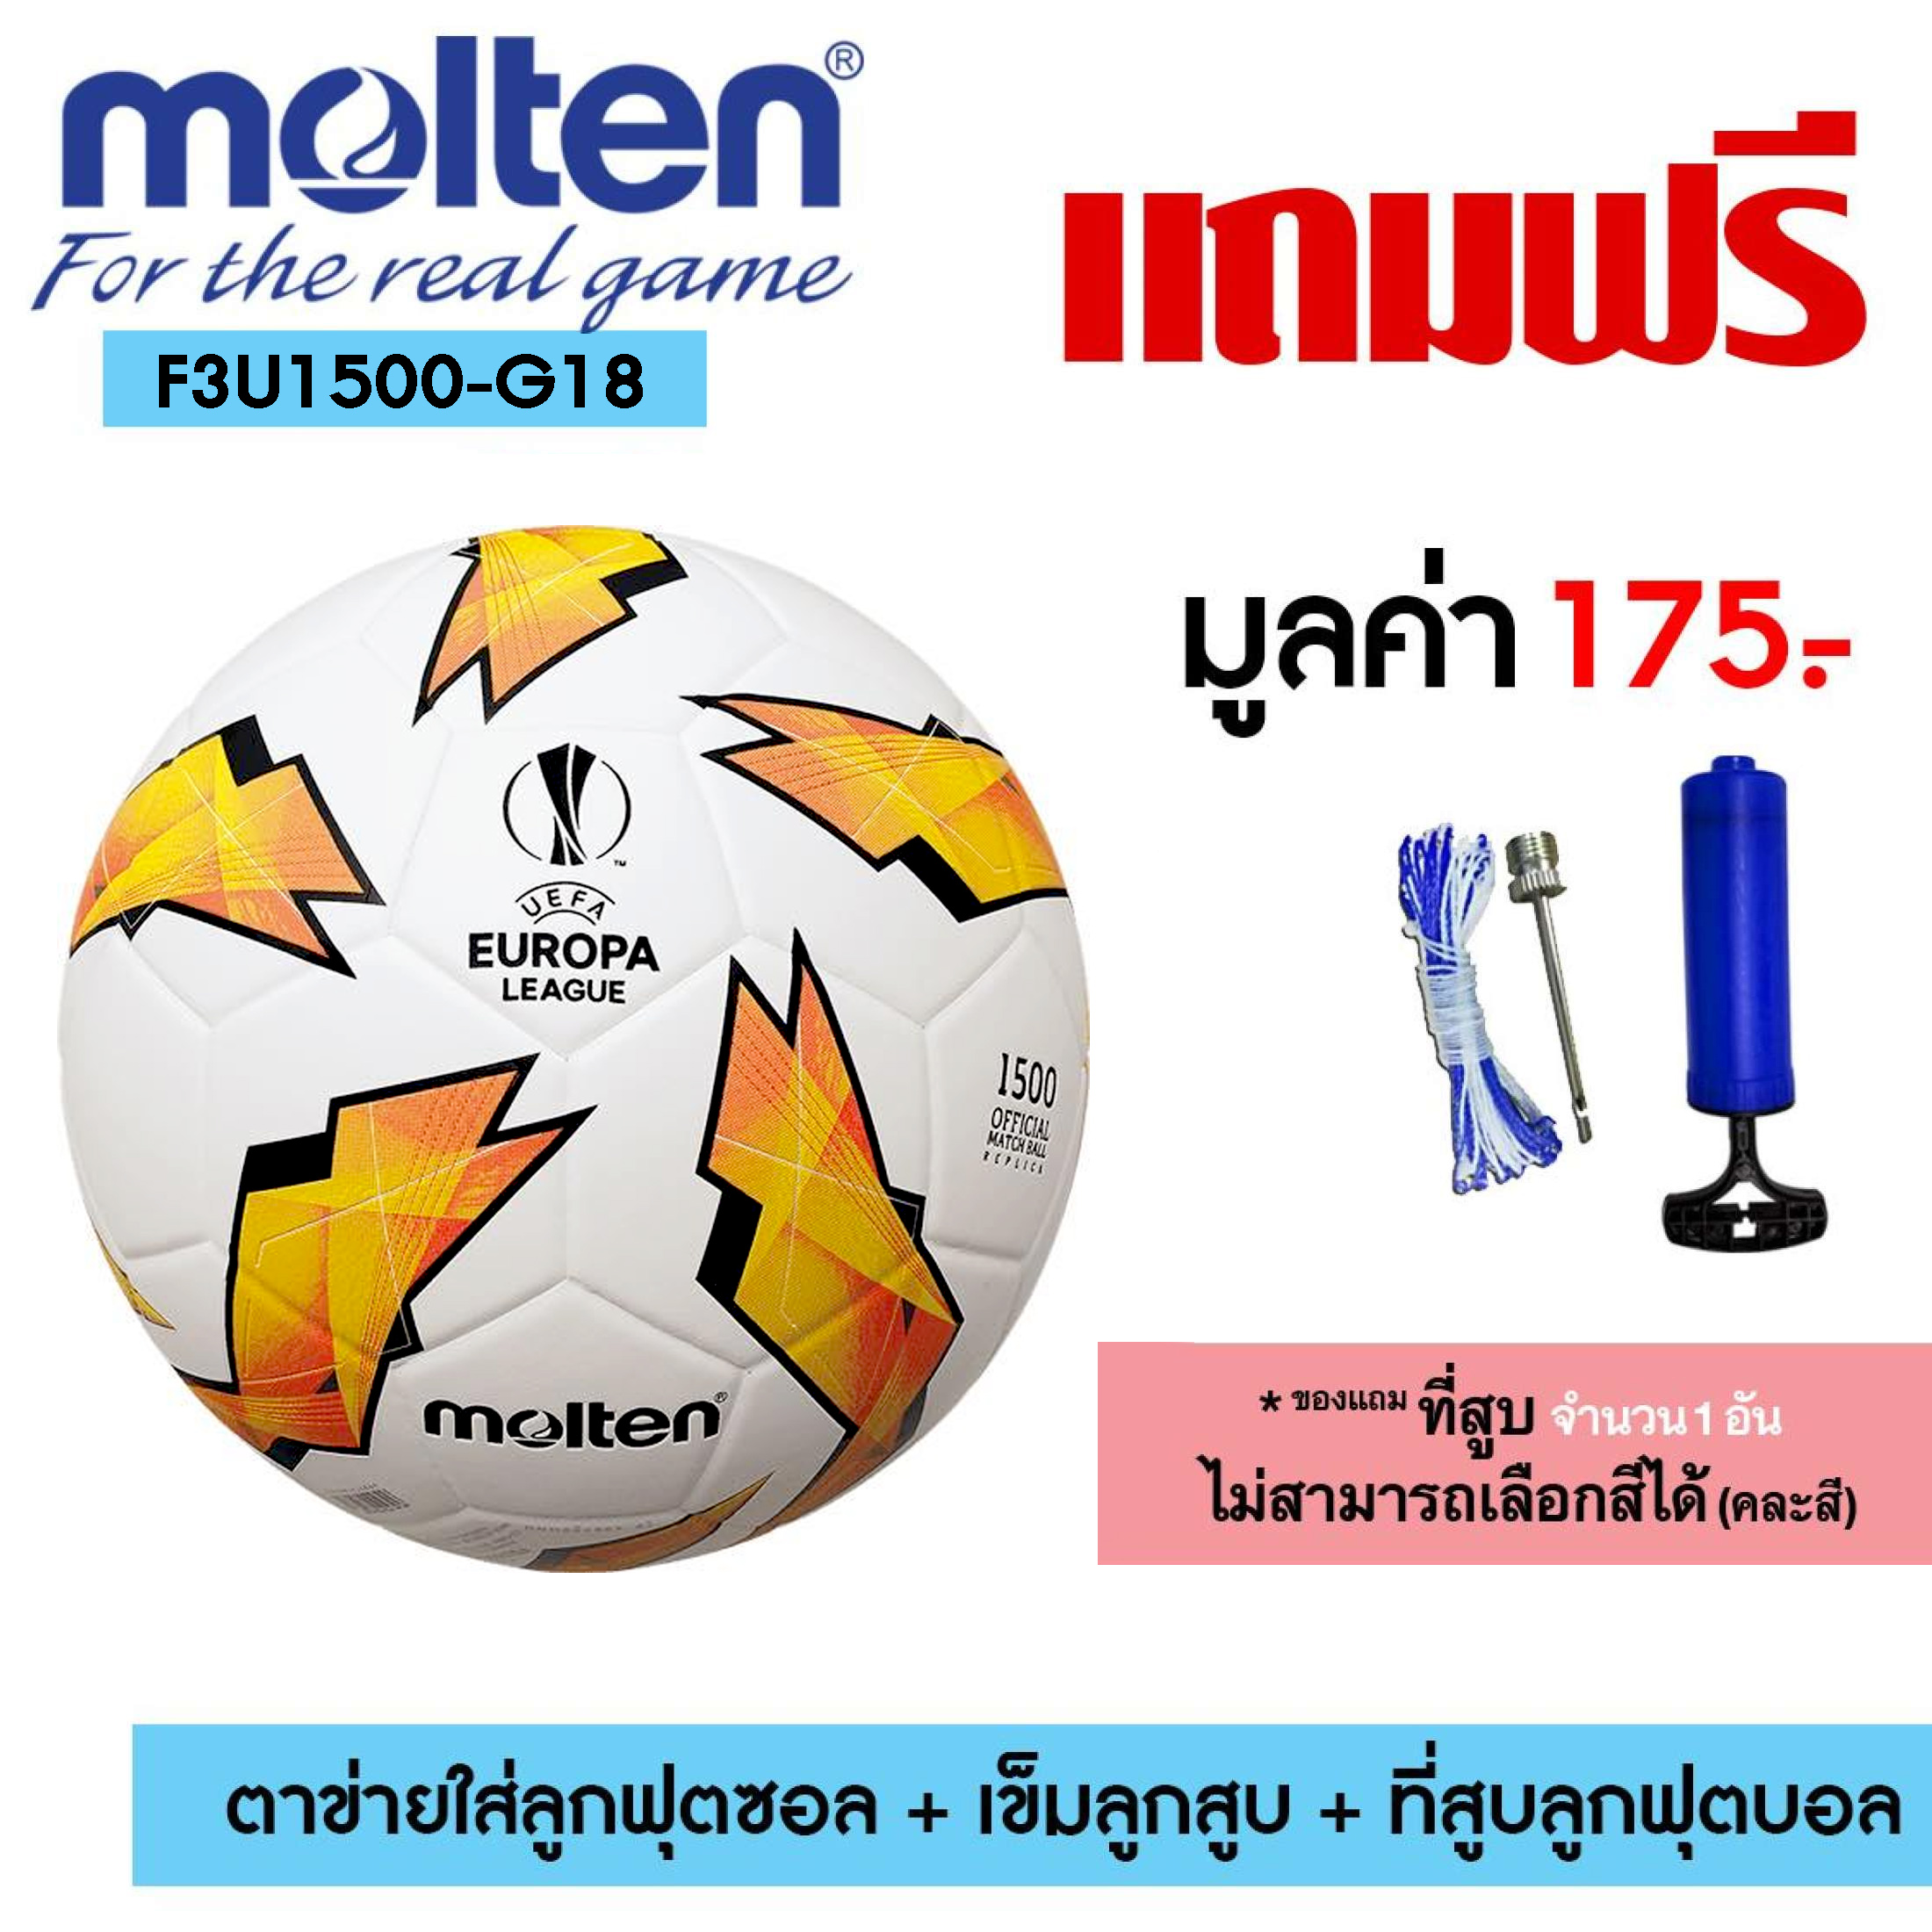 Molten ฟุตบอล หนังอัด ยูโรปา europa Football PVC th F3U1500 G18 (440) แถมฟรี ตาข่ายใส่ลูกฟุตบอล + เข็มสูบลม + สูบมือ SPL